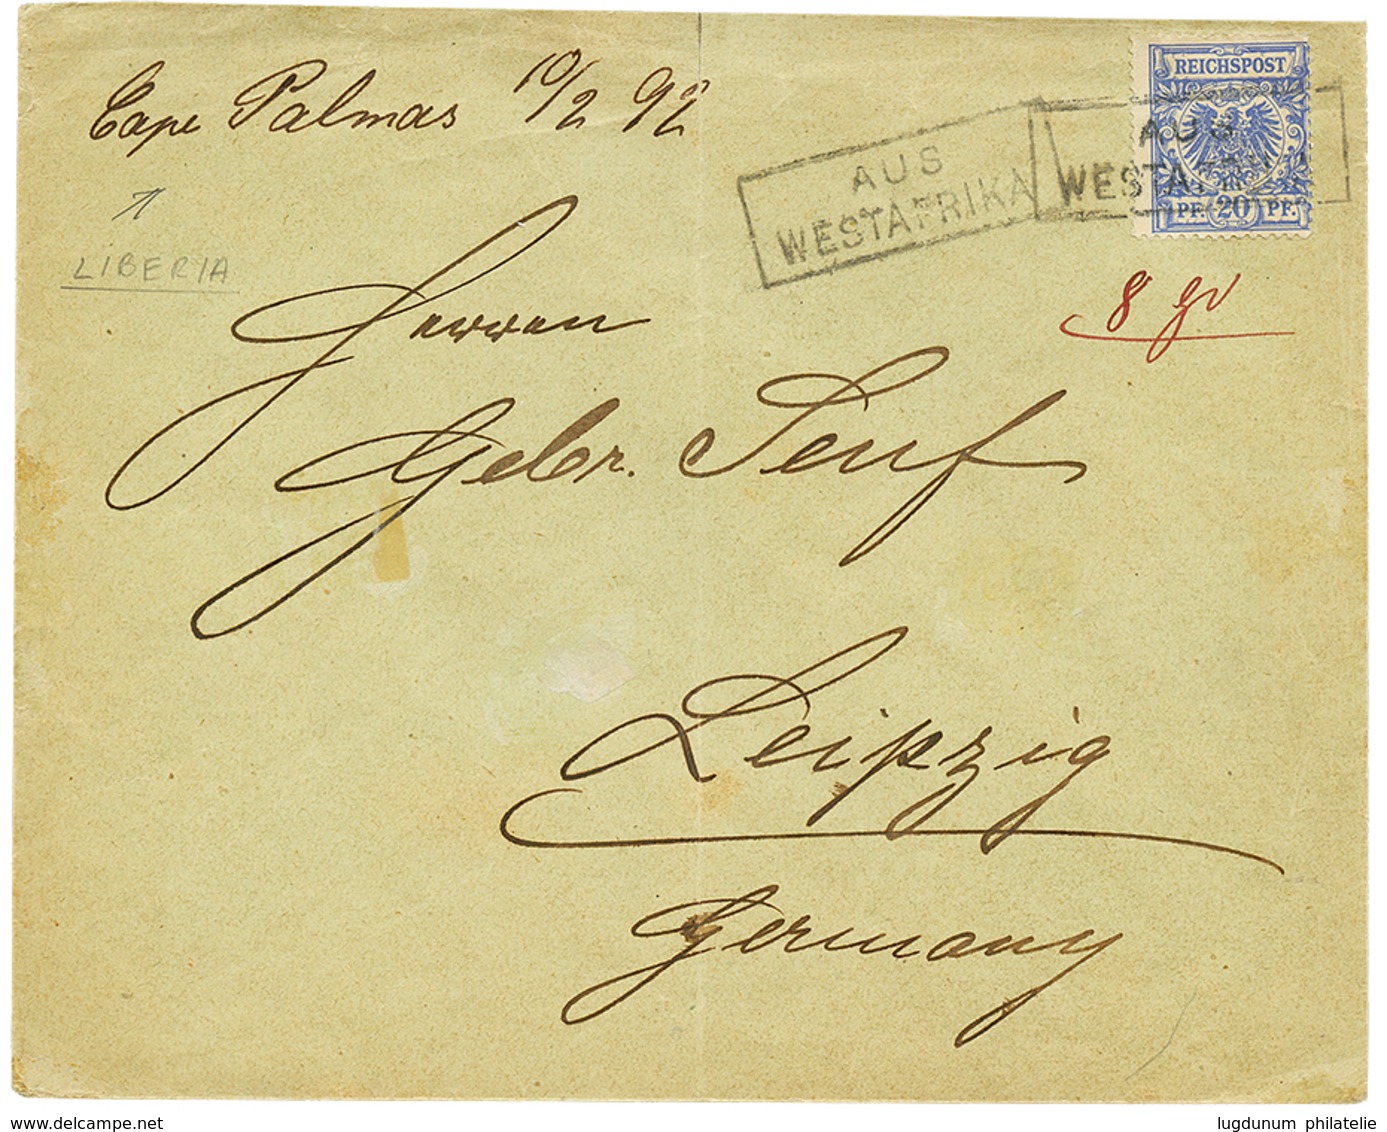 1170 LIBERIA : 1892 GERMANY 20pf Canc. AUS WESTAFRIKA + "CAPE PALMAS 10/2.92" On Envelope To LEIPZIG. Vvf. - Liberia